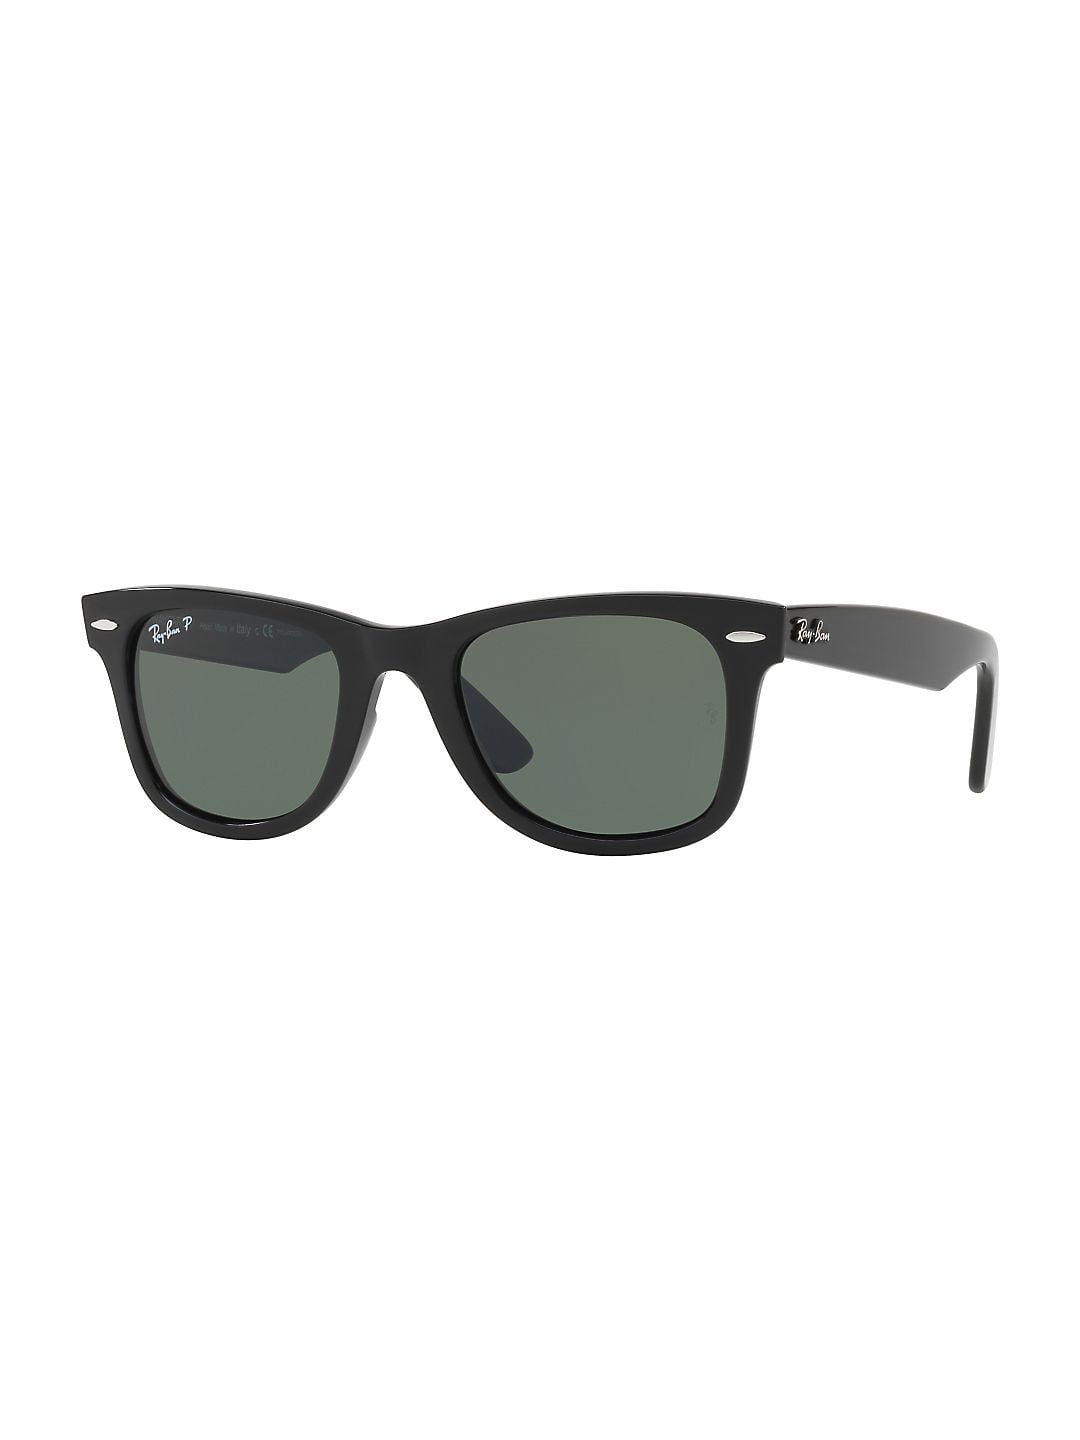 nietig directory Krijt Ray-Ban Unisex RB4340 Wayfarer Ease Sunglasses, 50mm - Walmart.com